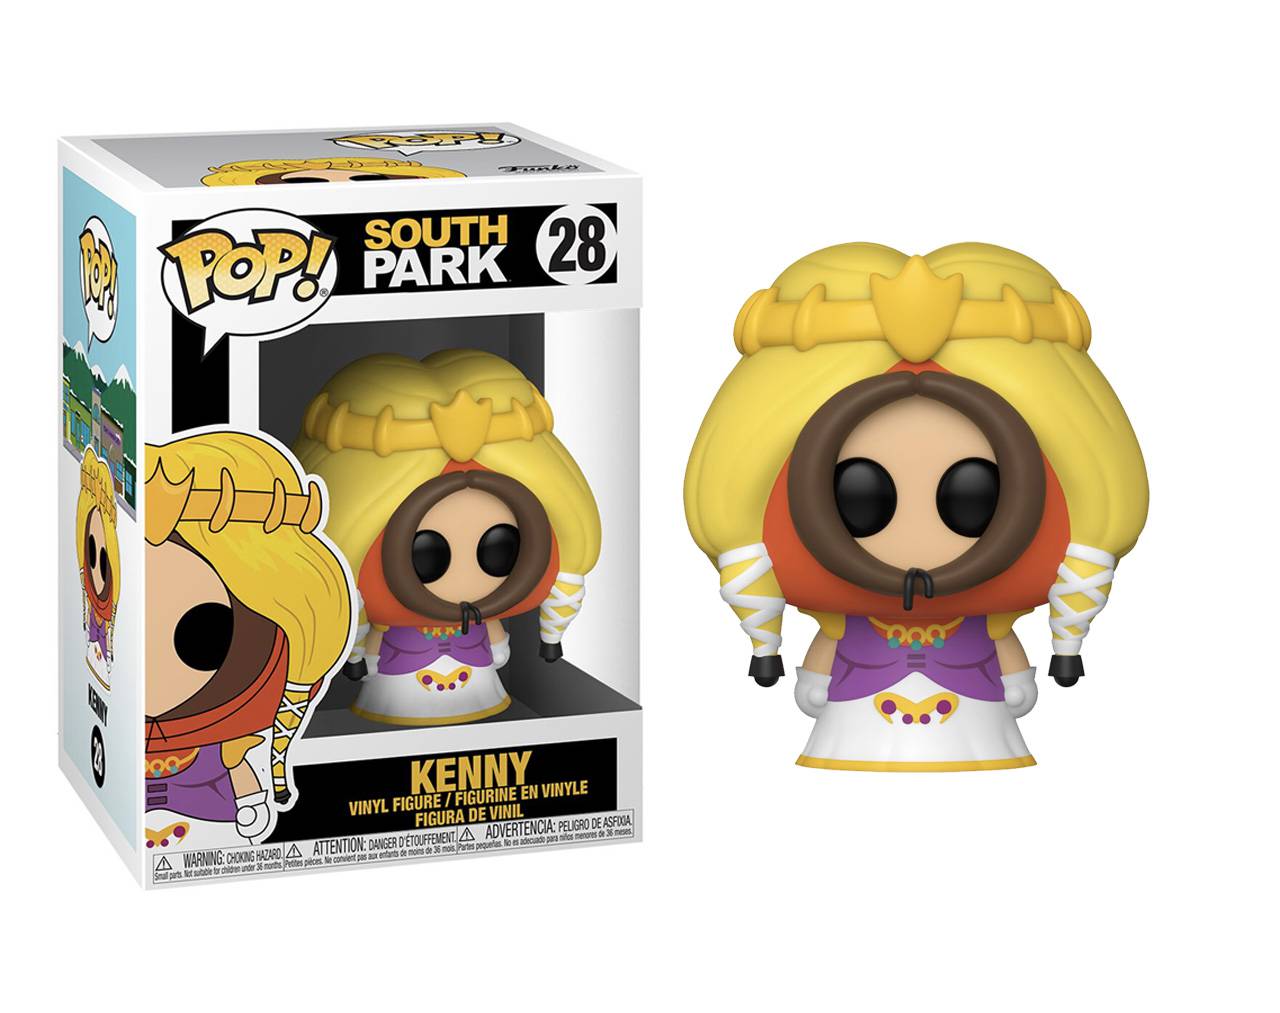 Kenny (Princess) Pop! Vinyl